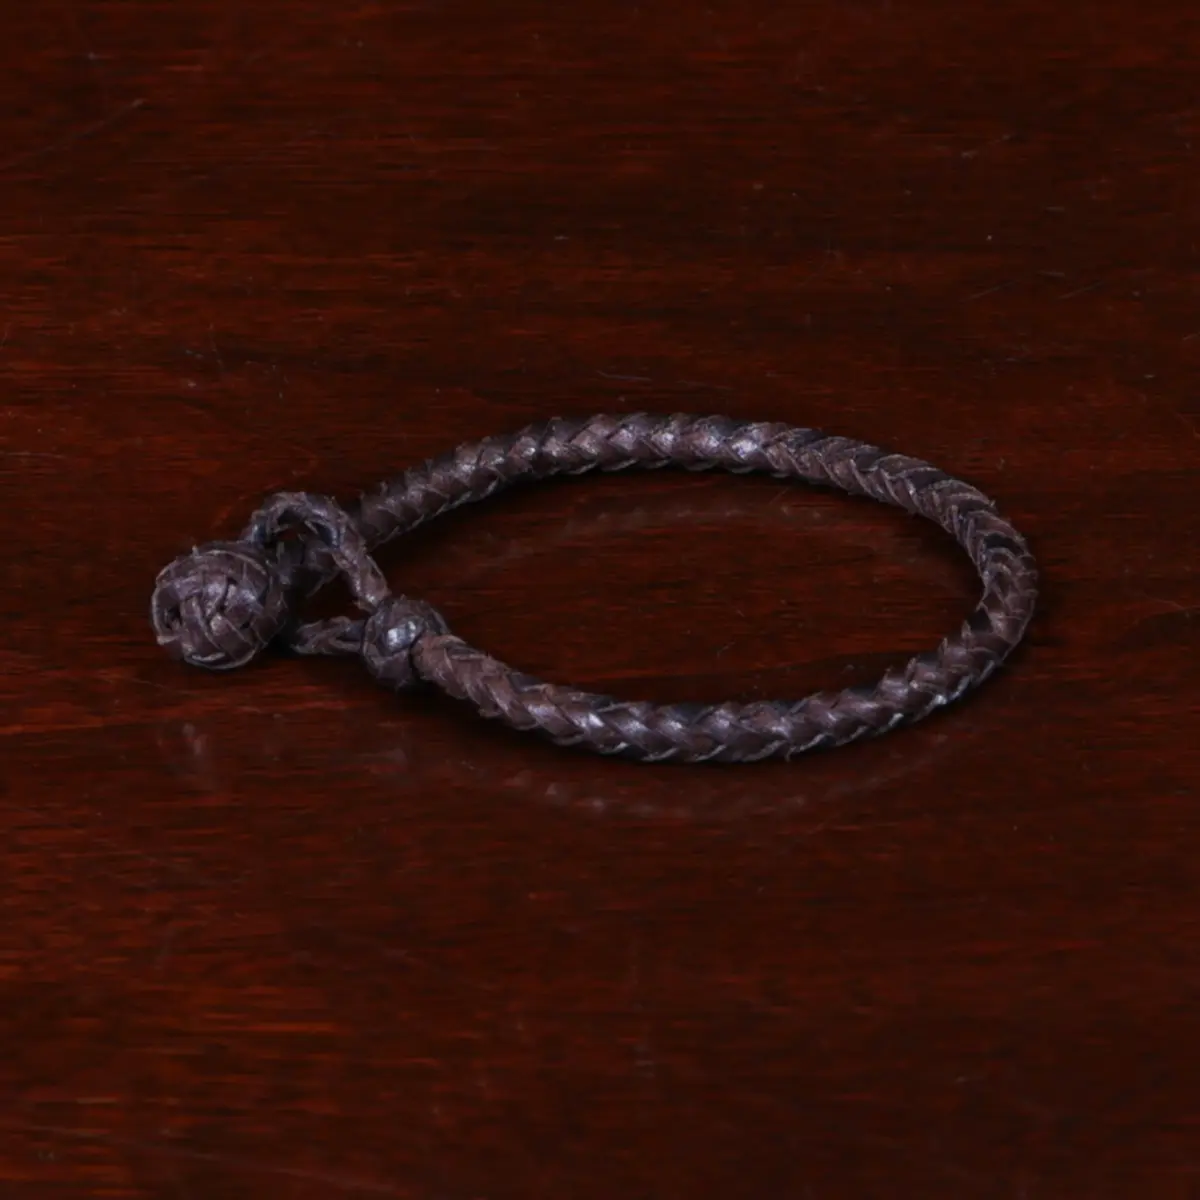 https://www.colonellittleton.com/wp-content/uploads/2014/02/braided-leather-bracelet-main-1.webp